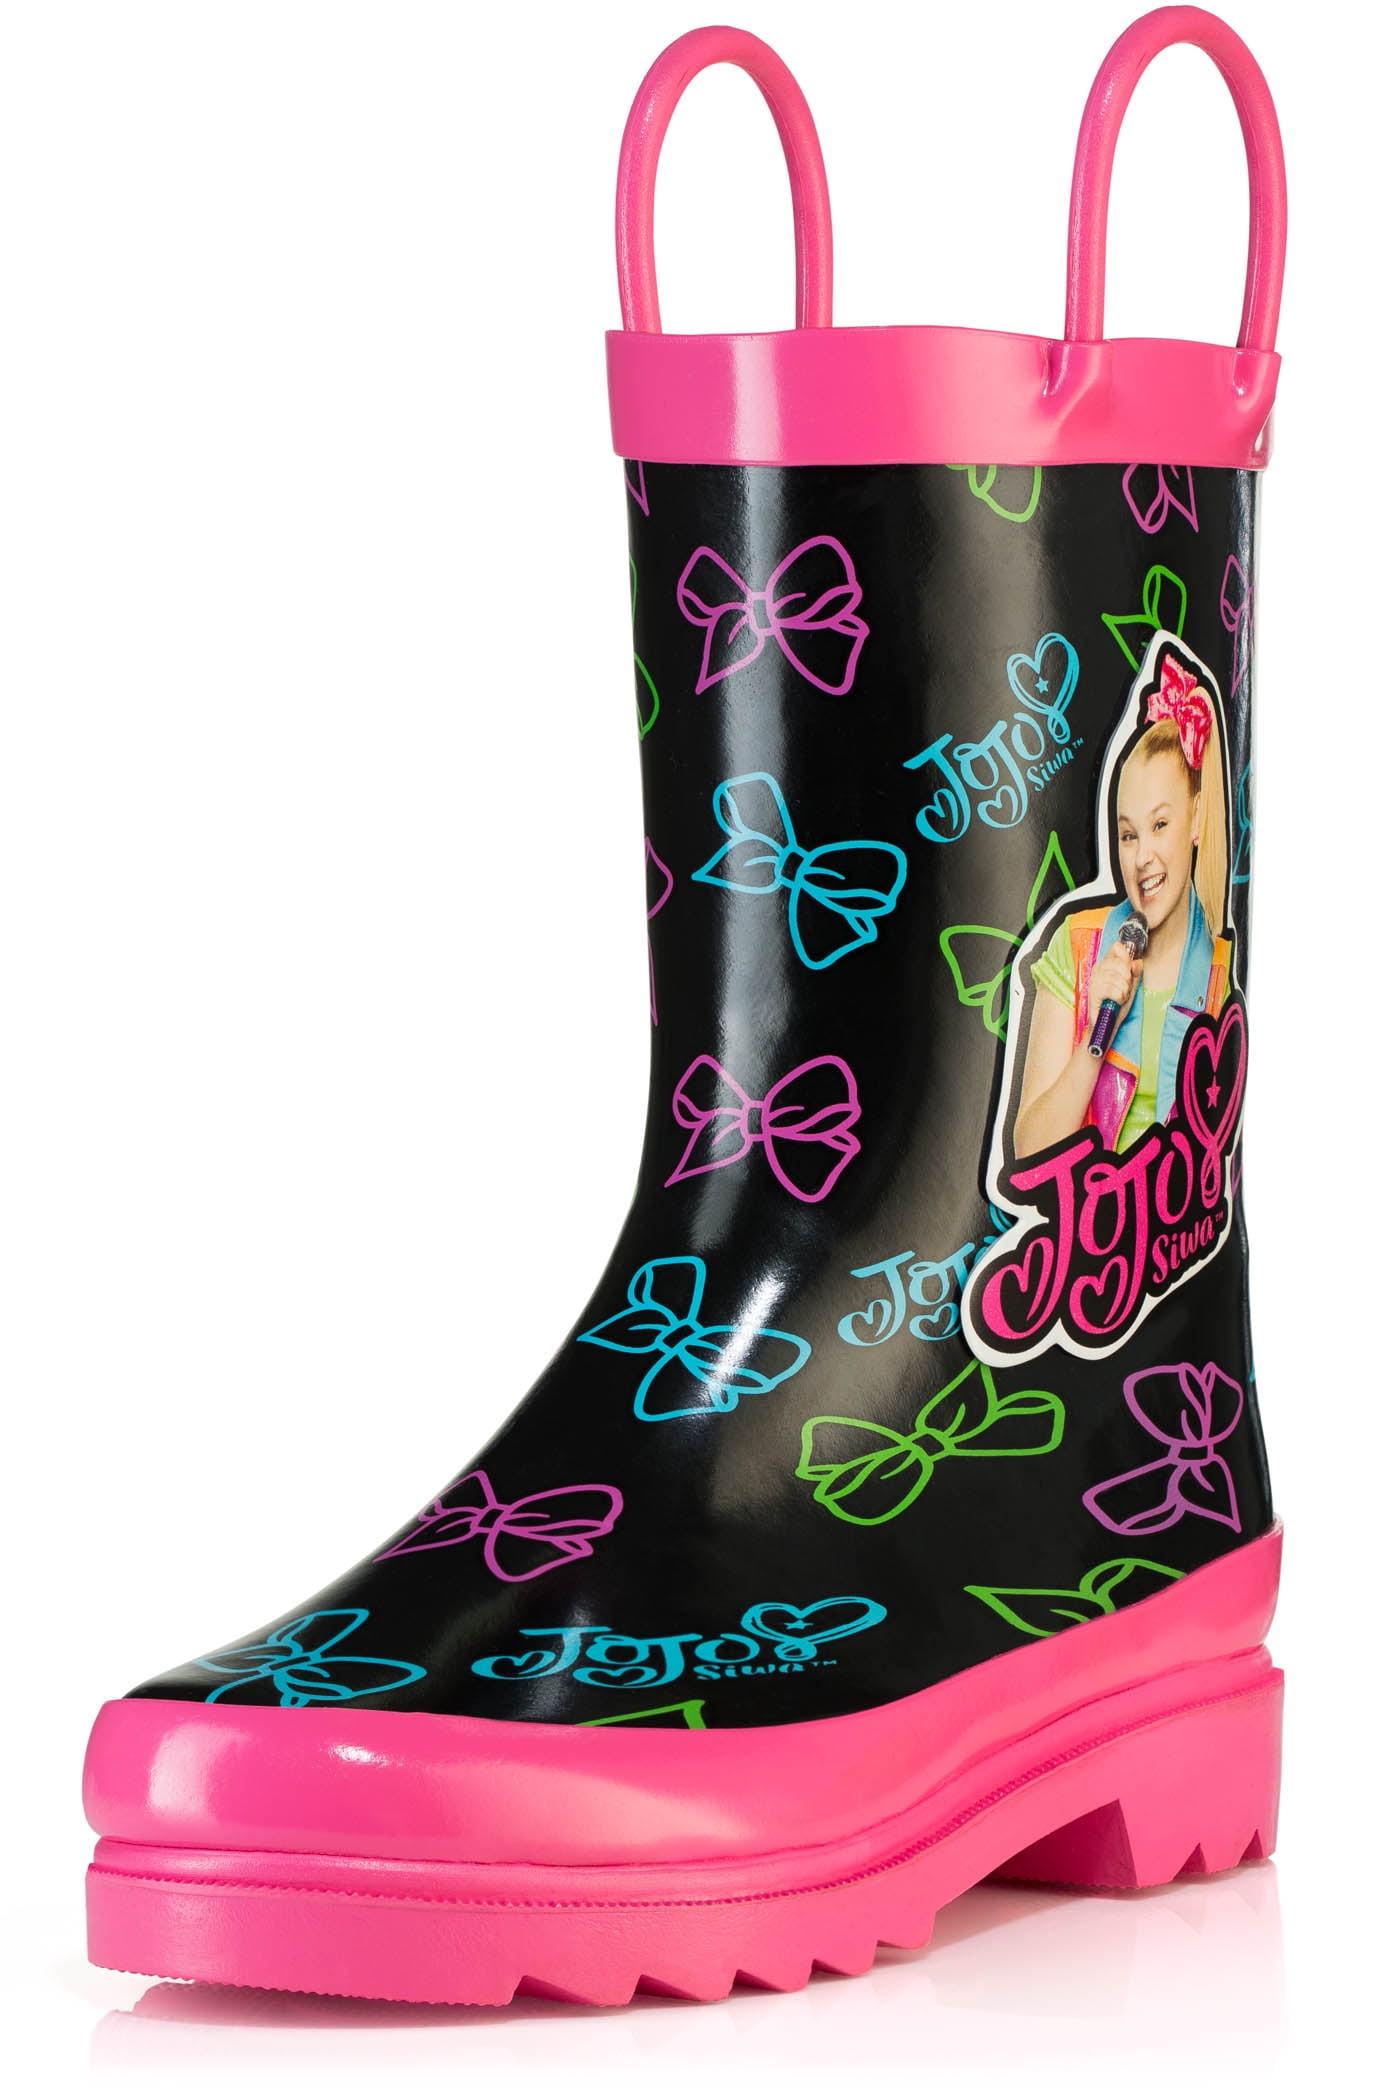 Nickelodeon JoJo Siwa Rain Boots 